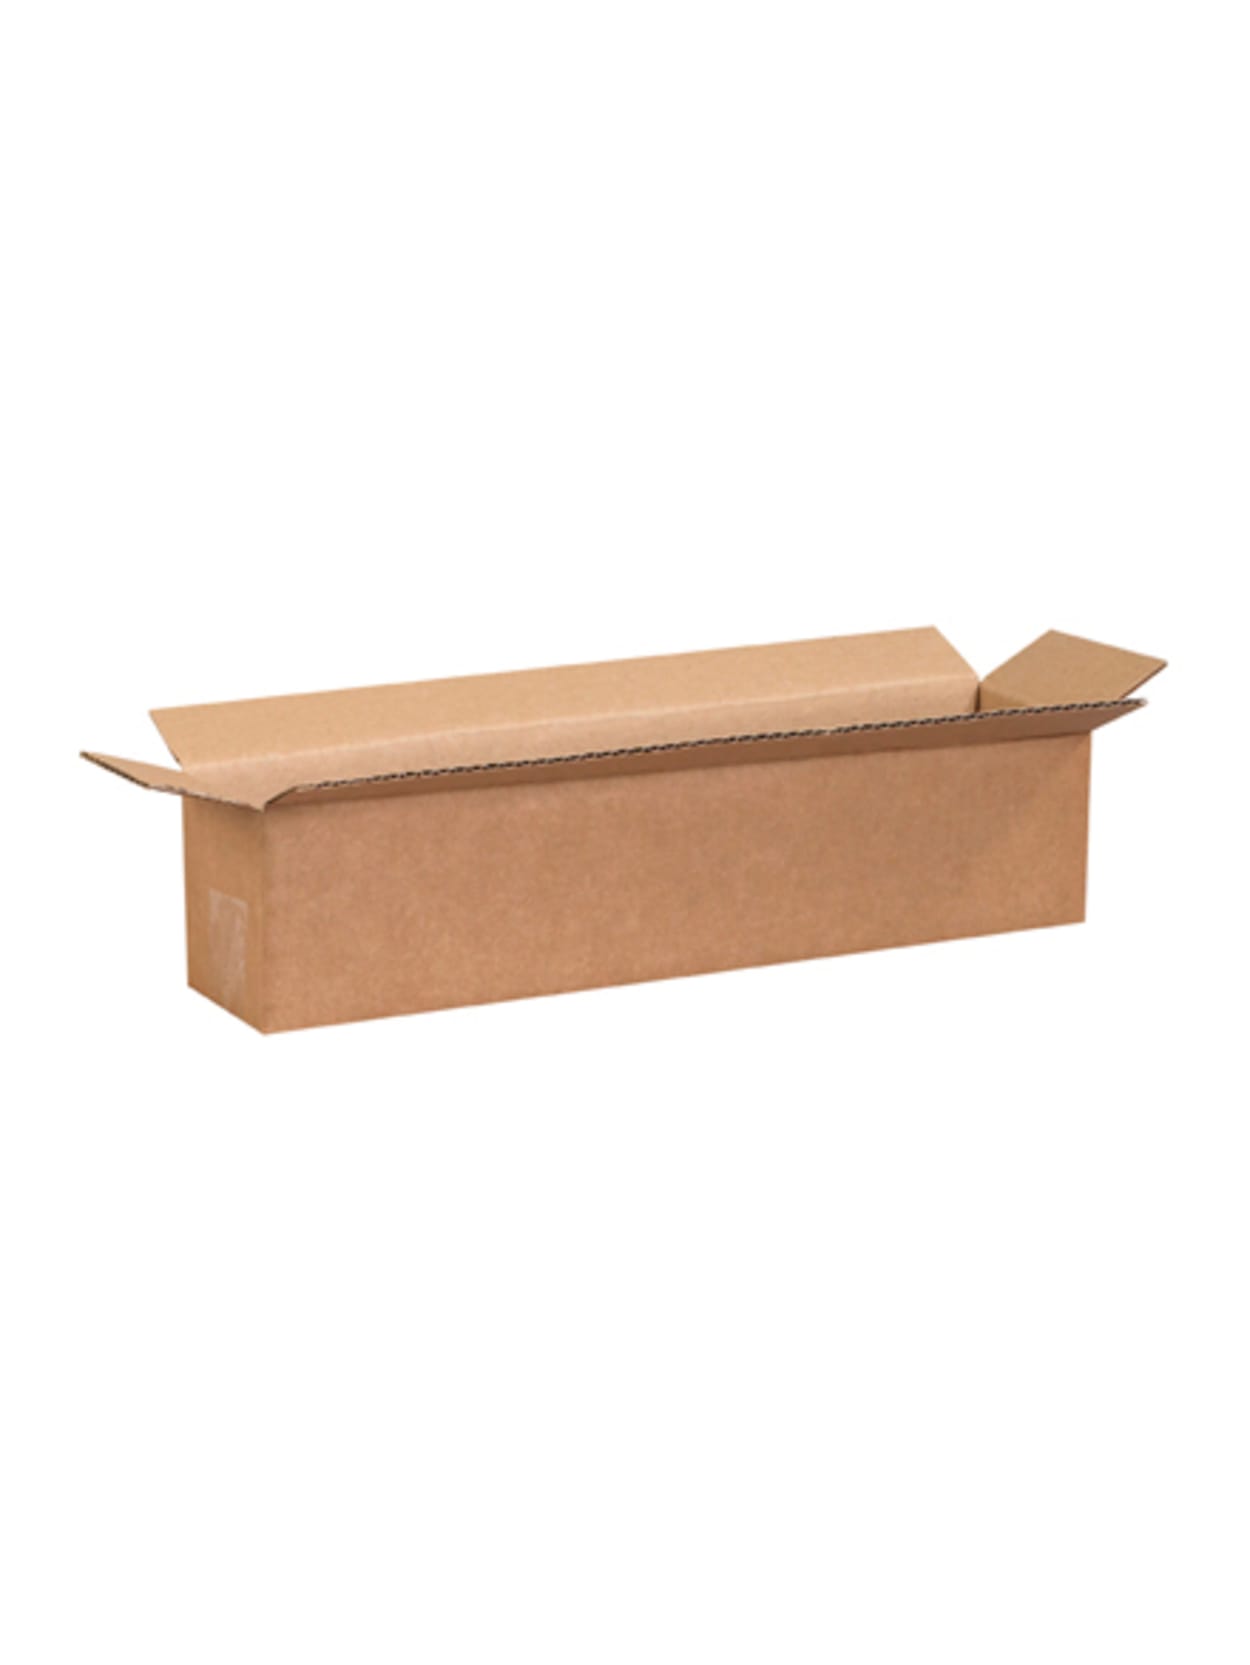 long cardboard boxes